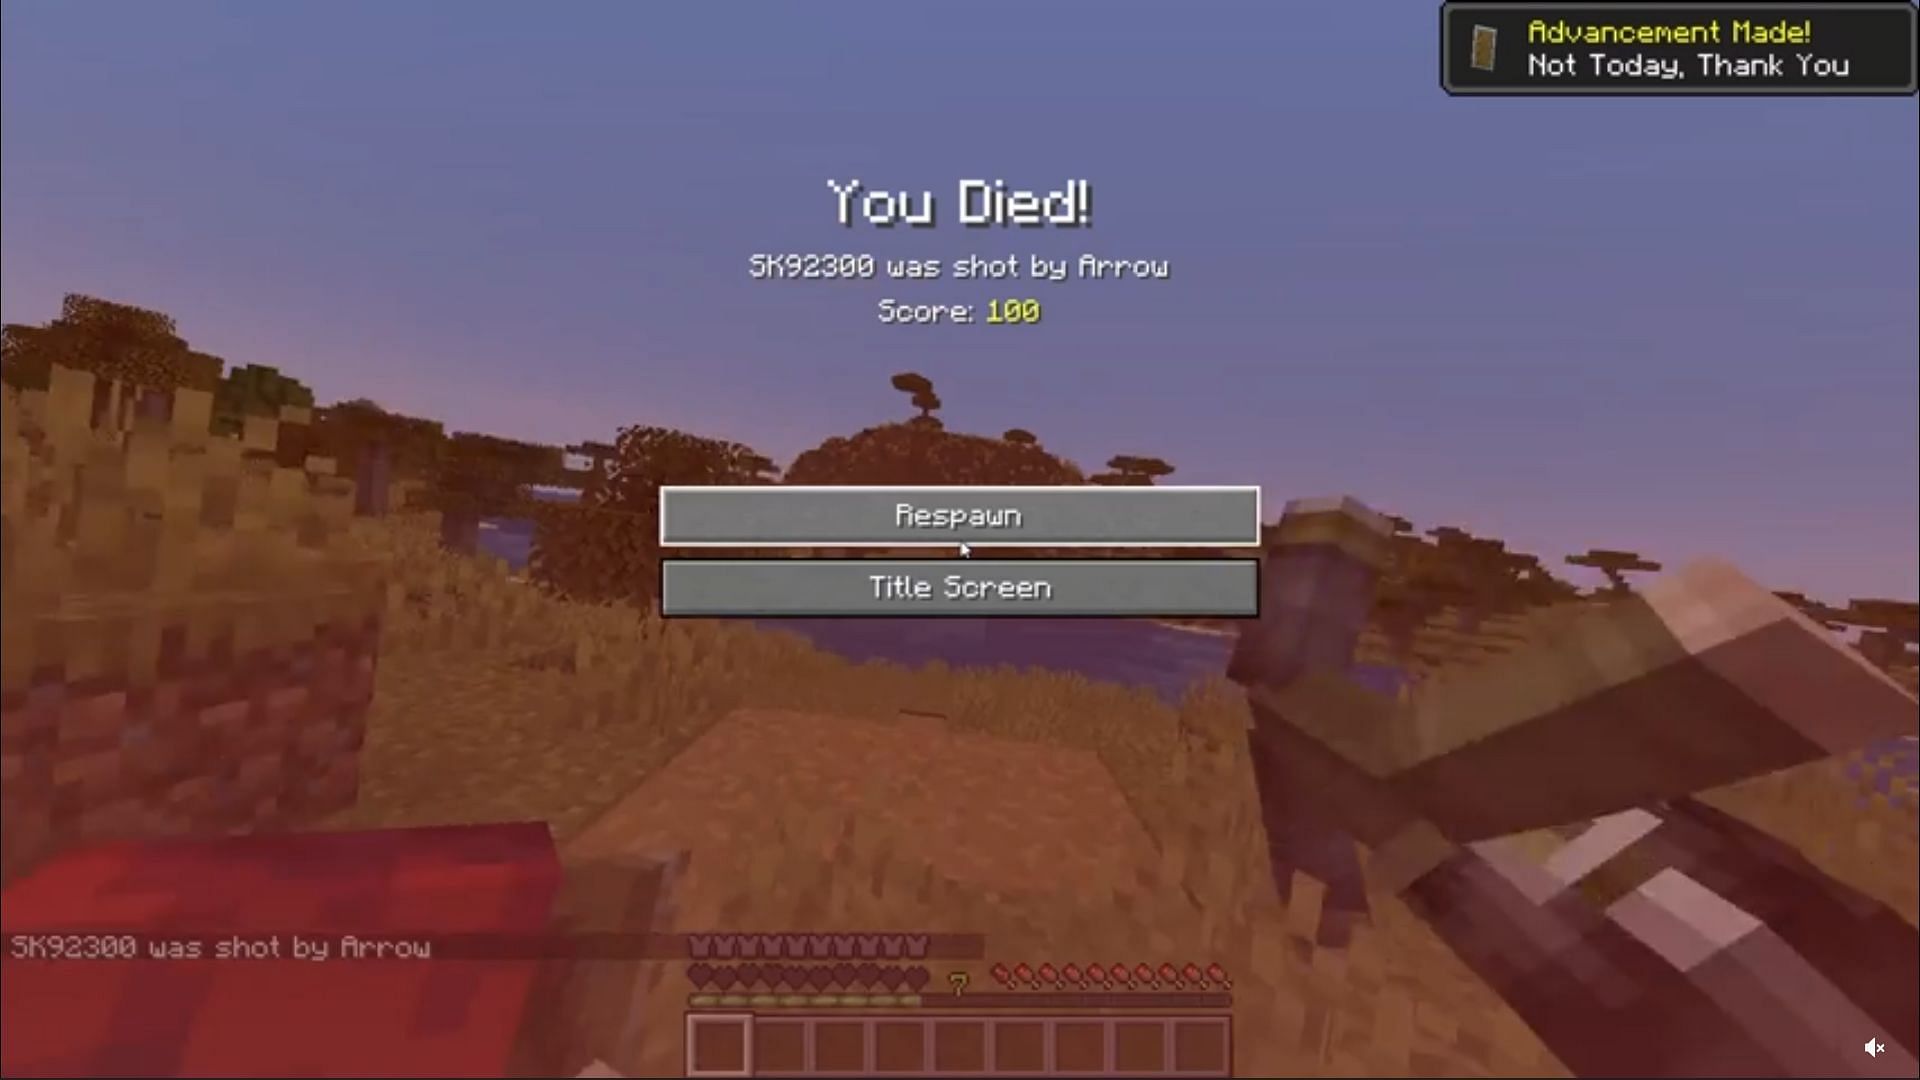 Both villager and player died and rag dolled (Image via u/SK92300 Reddit)